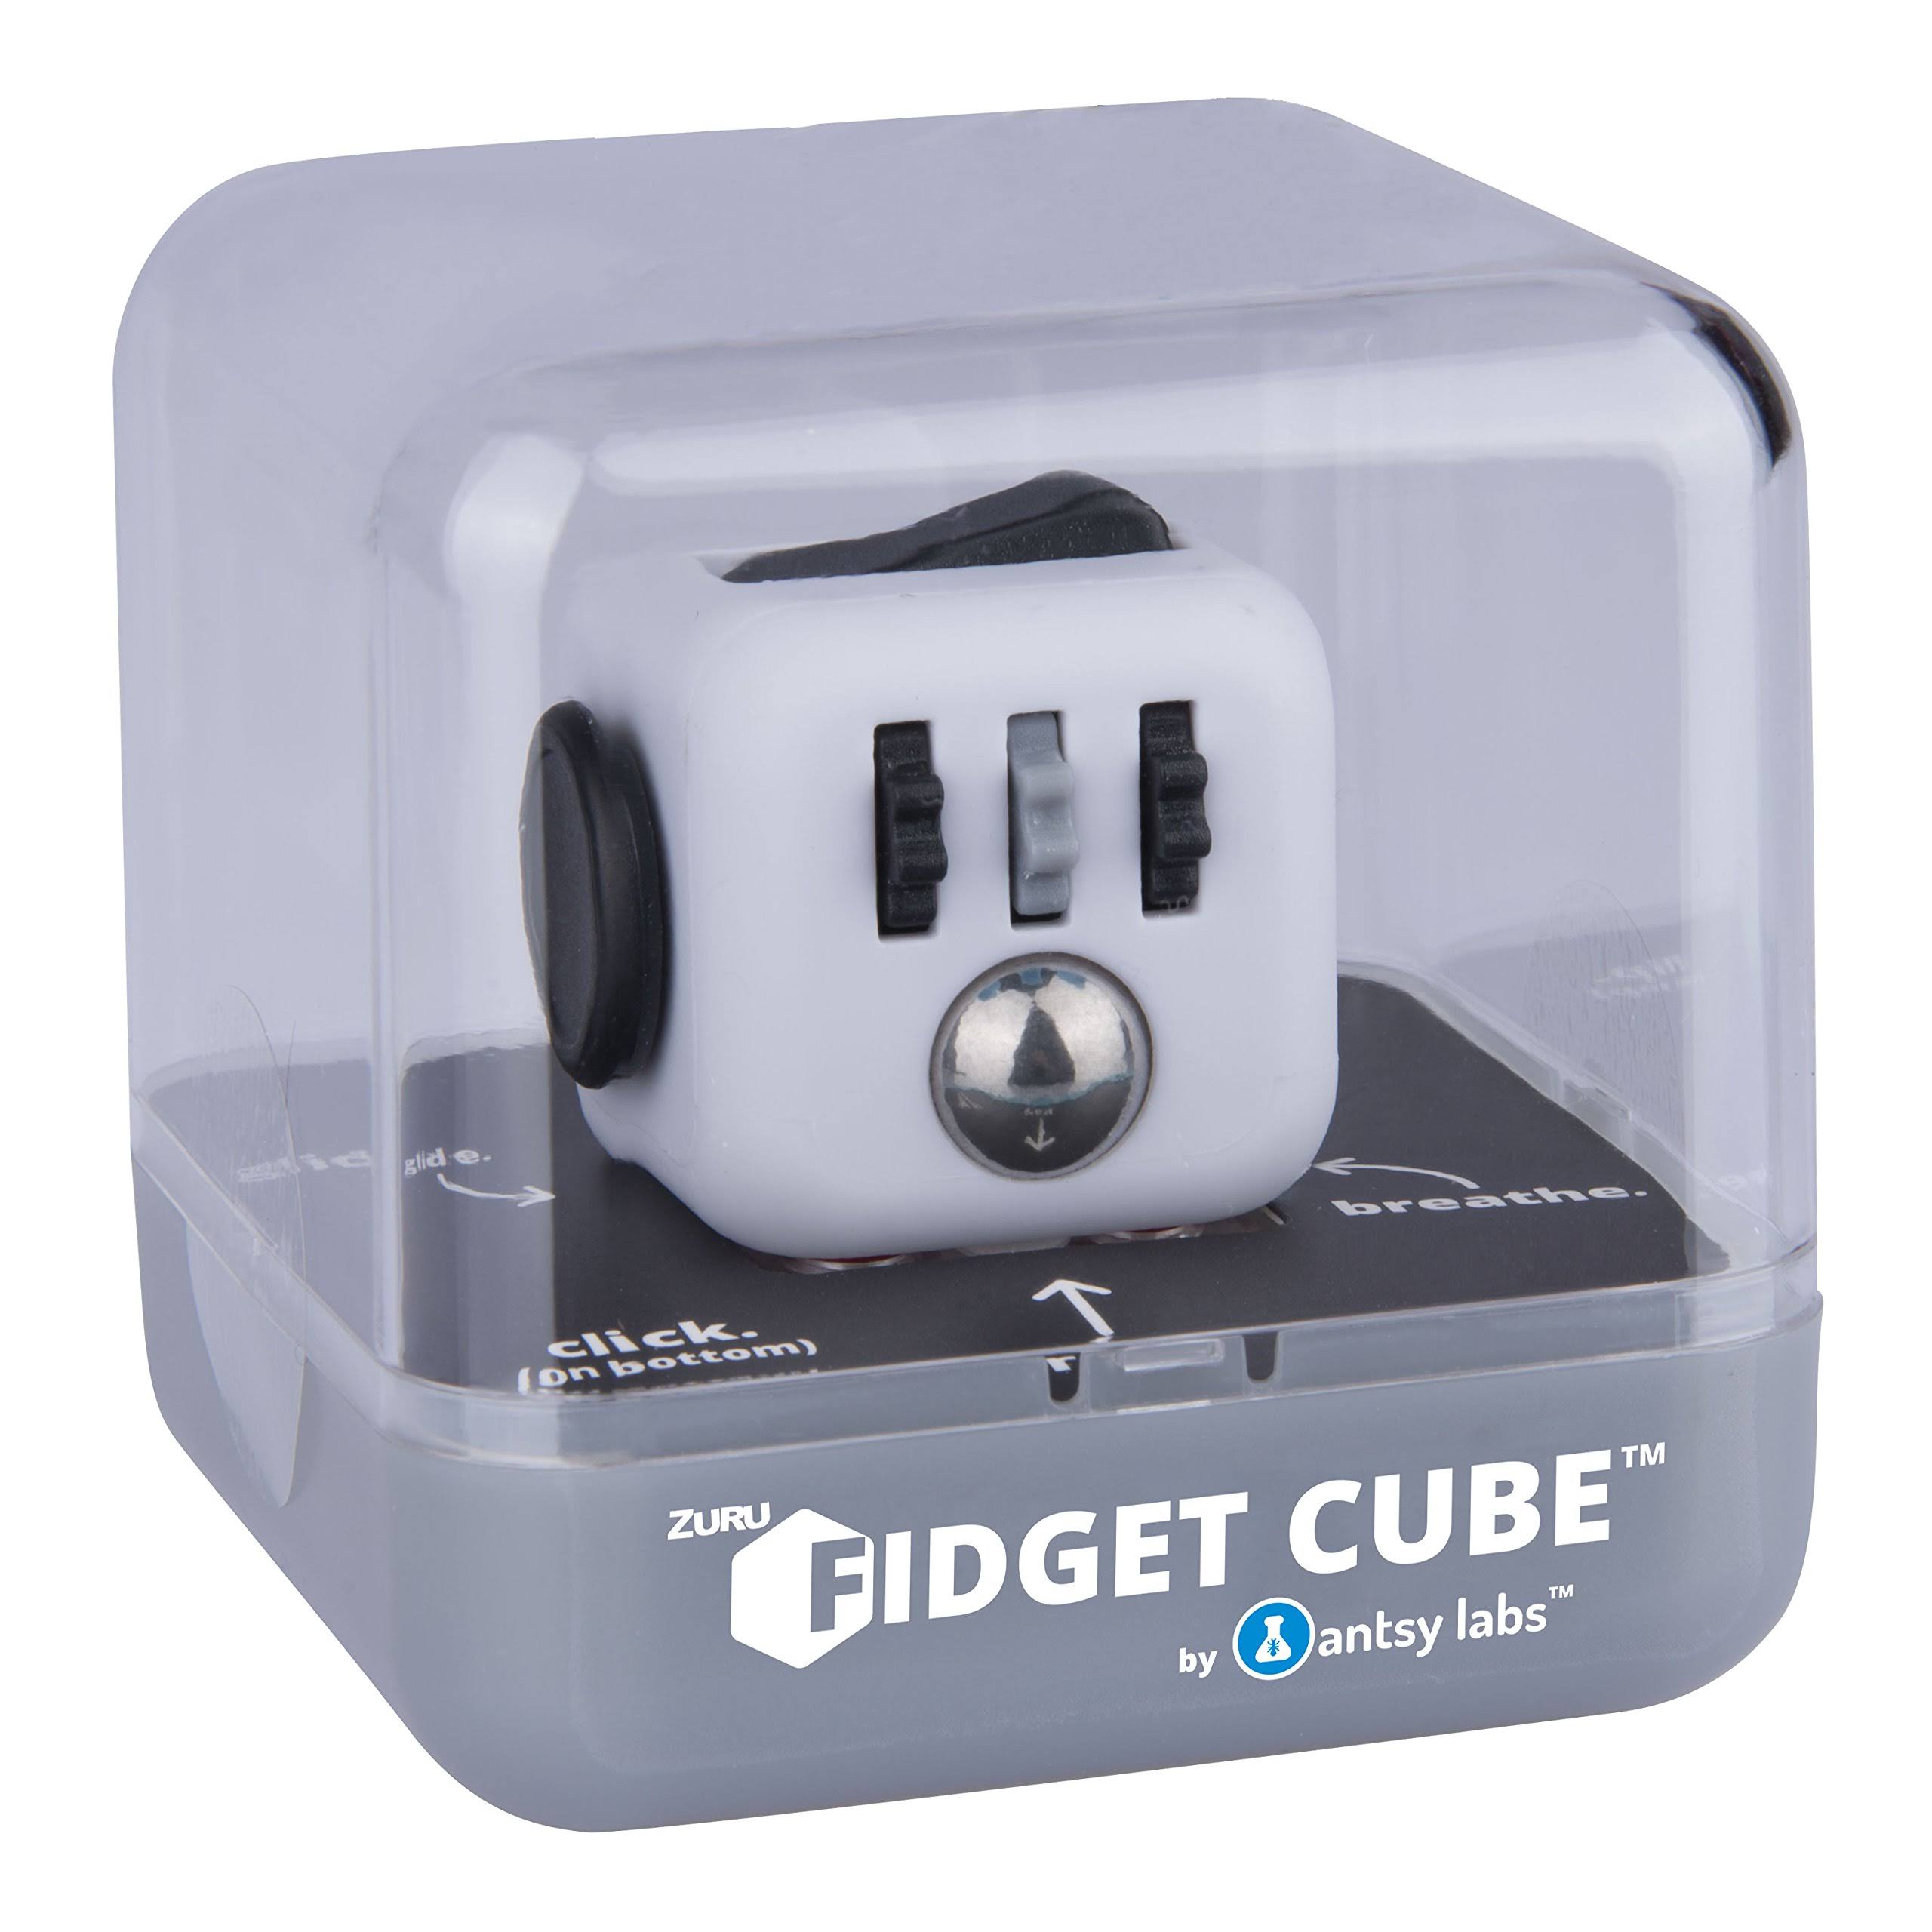 Zuru Original Fidget Cube Toy - Gray and Black